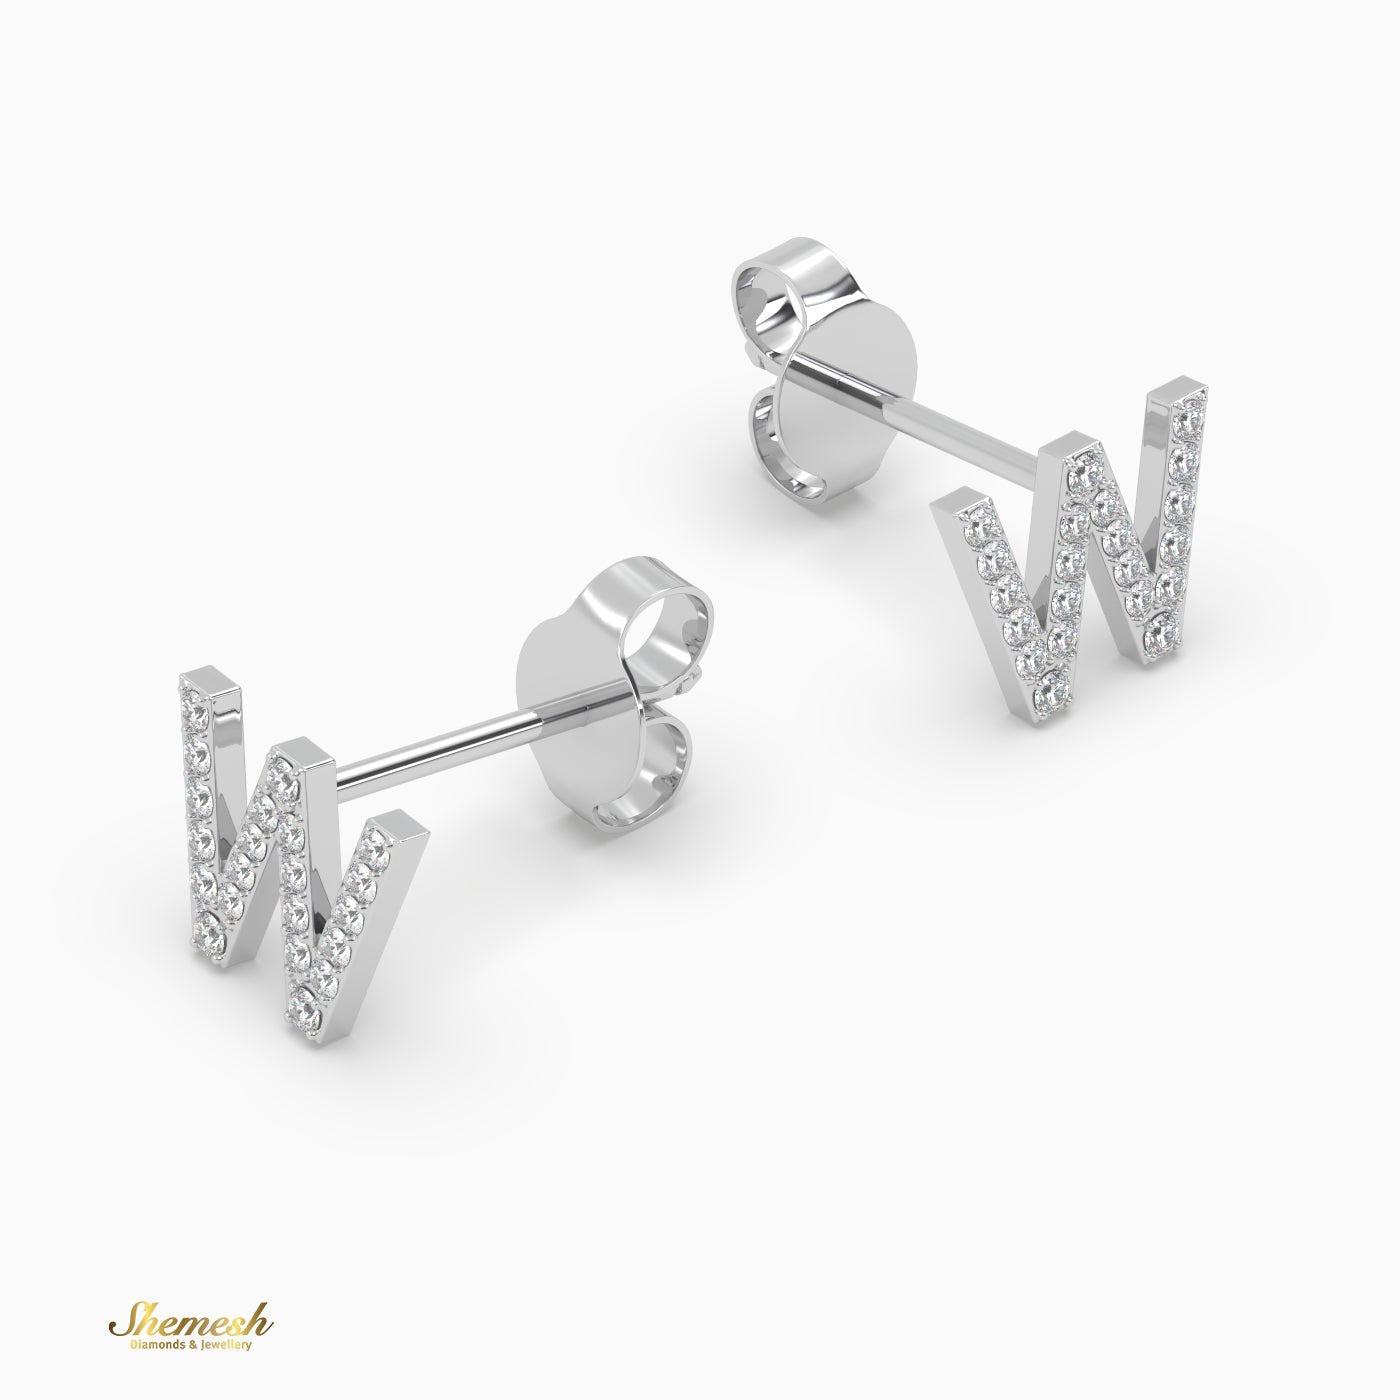 18K Gold "W" Initial Stud Earrings - shemesh_diamonds